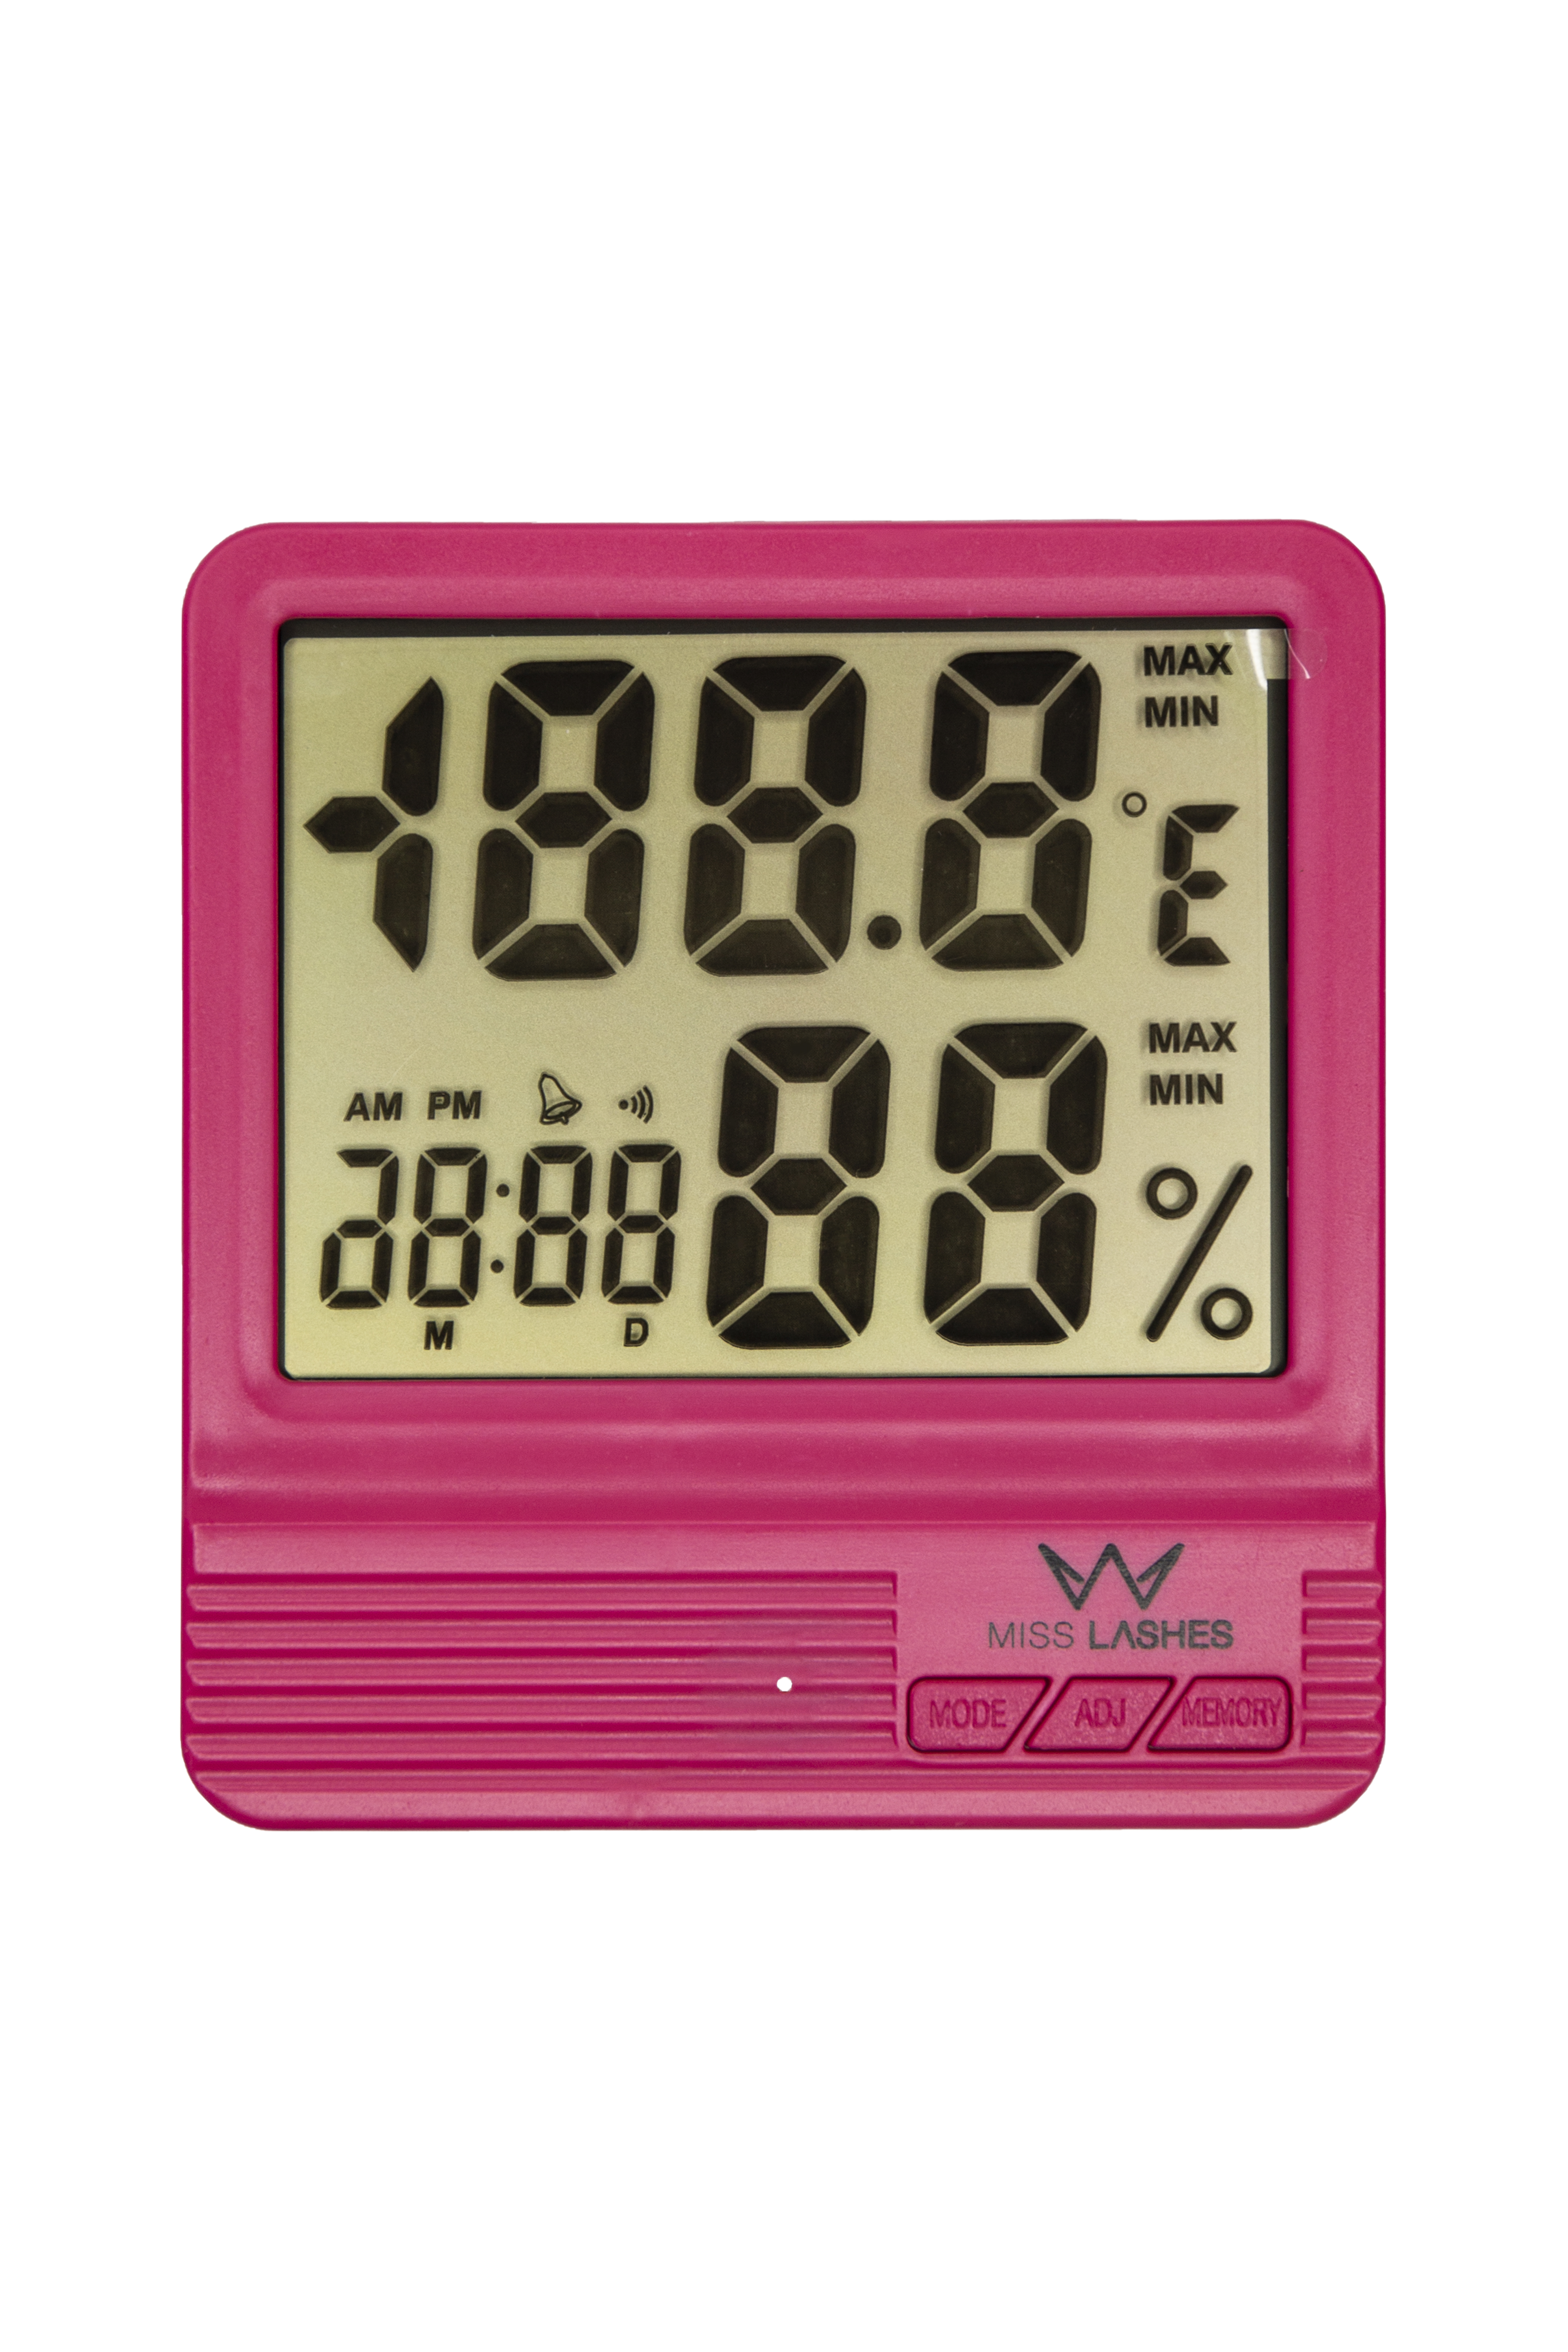 Thermometer & Hygrometer 